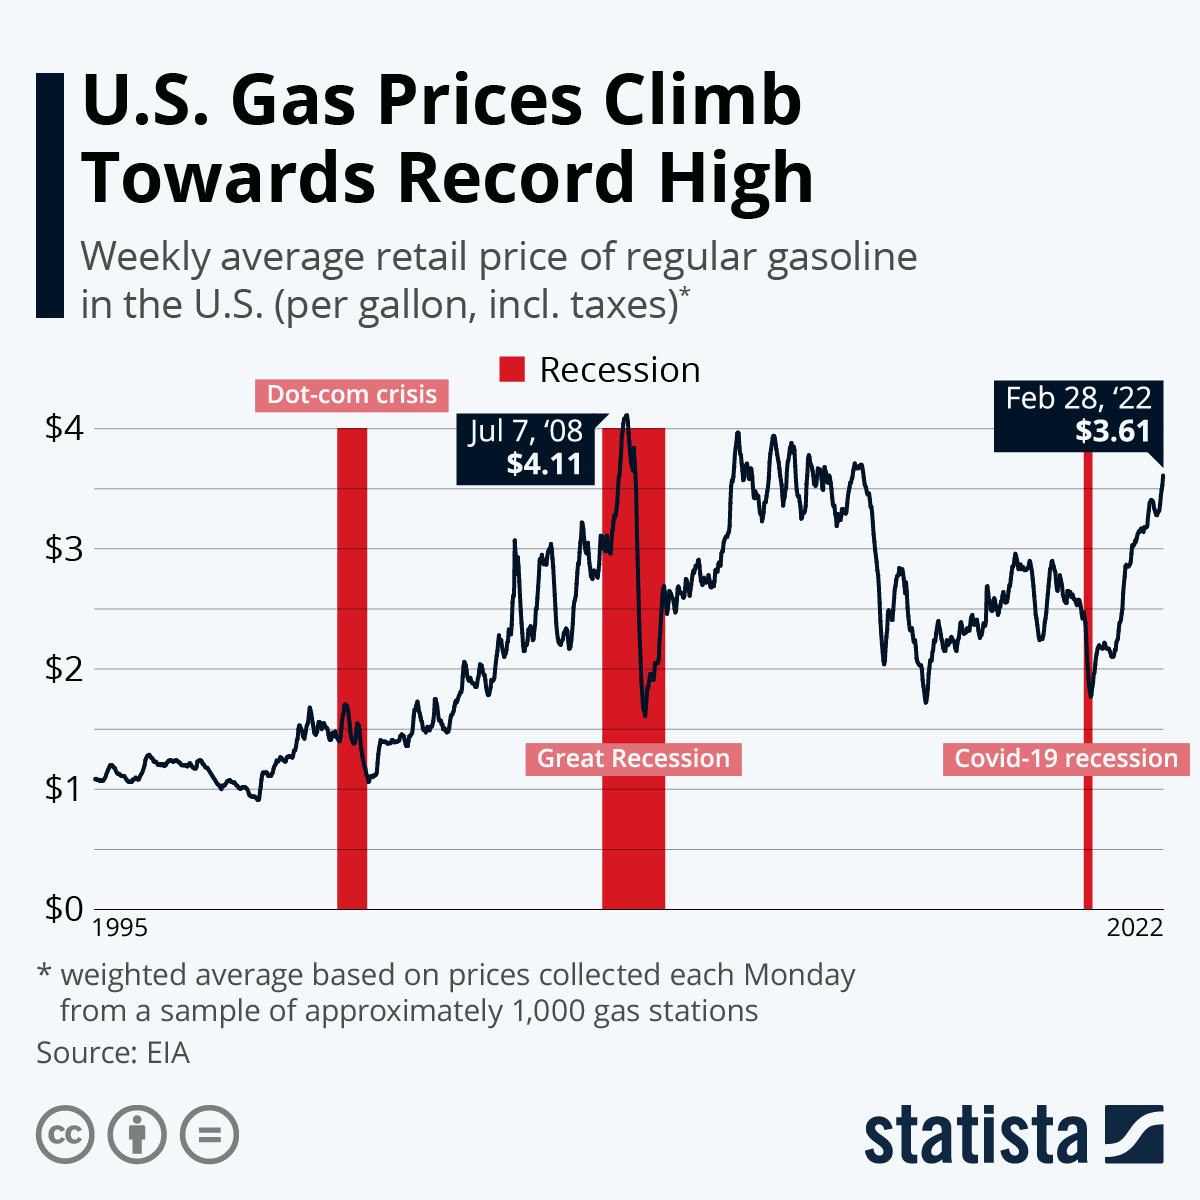 U.S. Gas Prices Climb Towards Record High